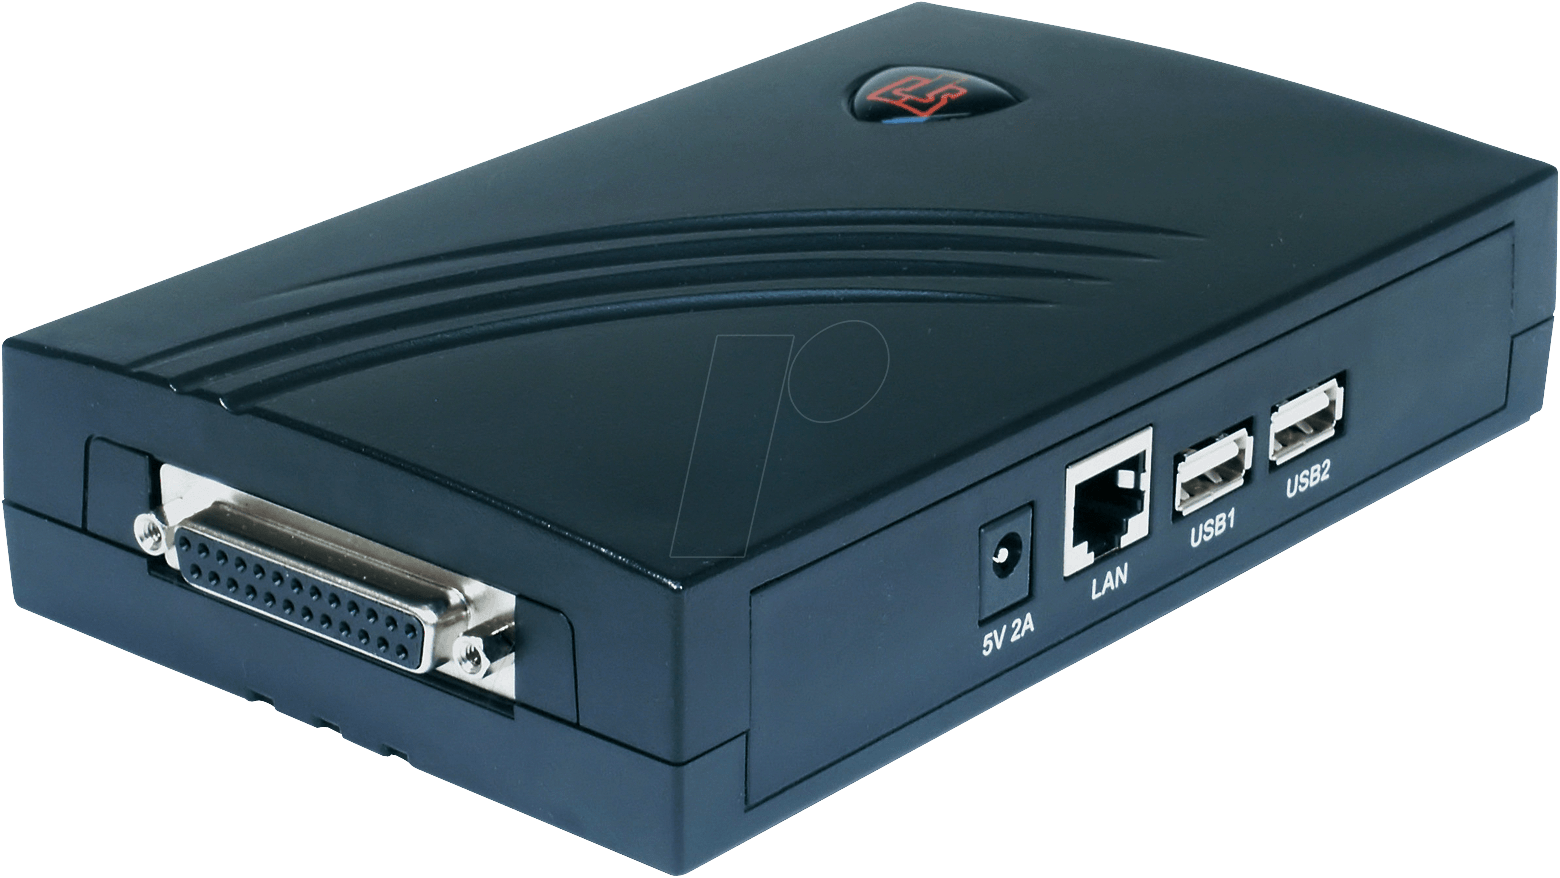 LCS PS112 - Printserver, 1x RJ45, 2x USB 2.0, 1x parallel von Longshine